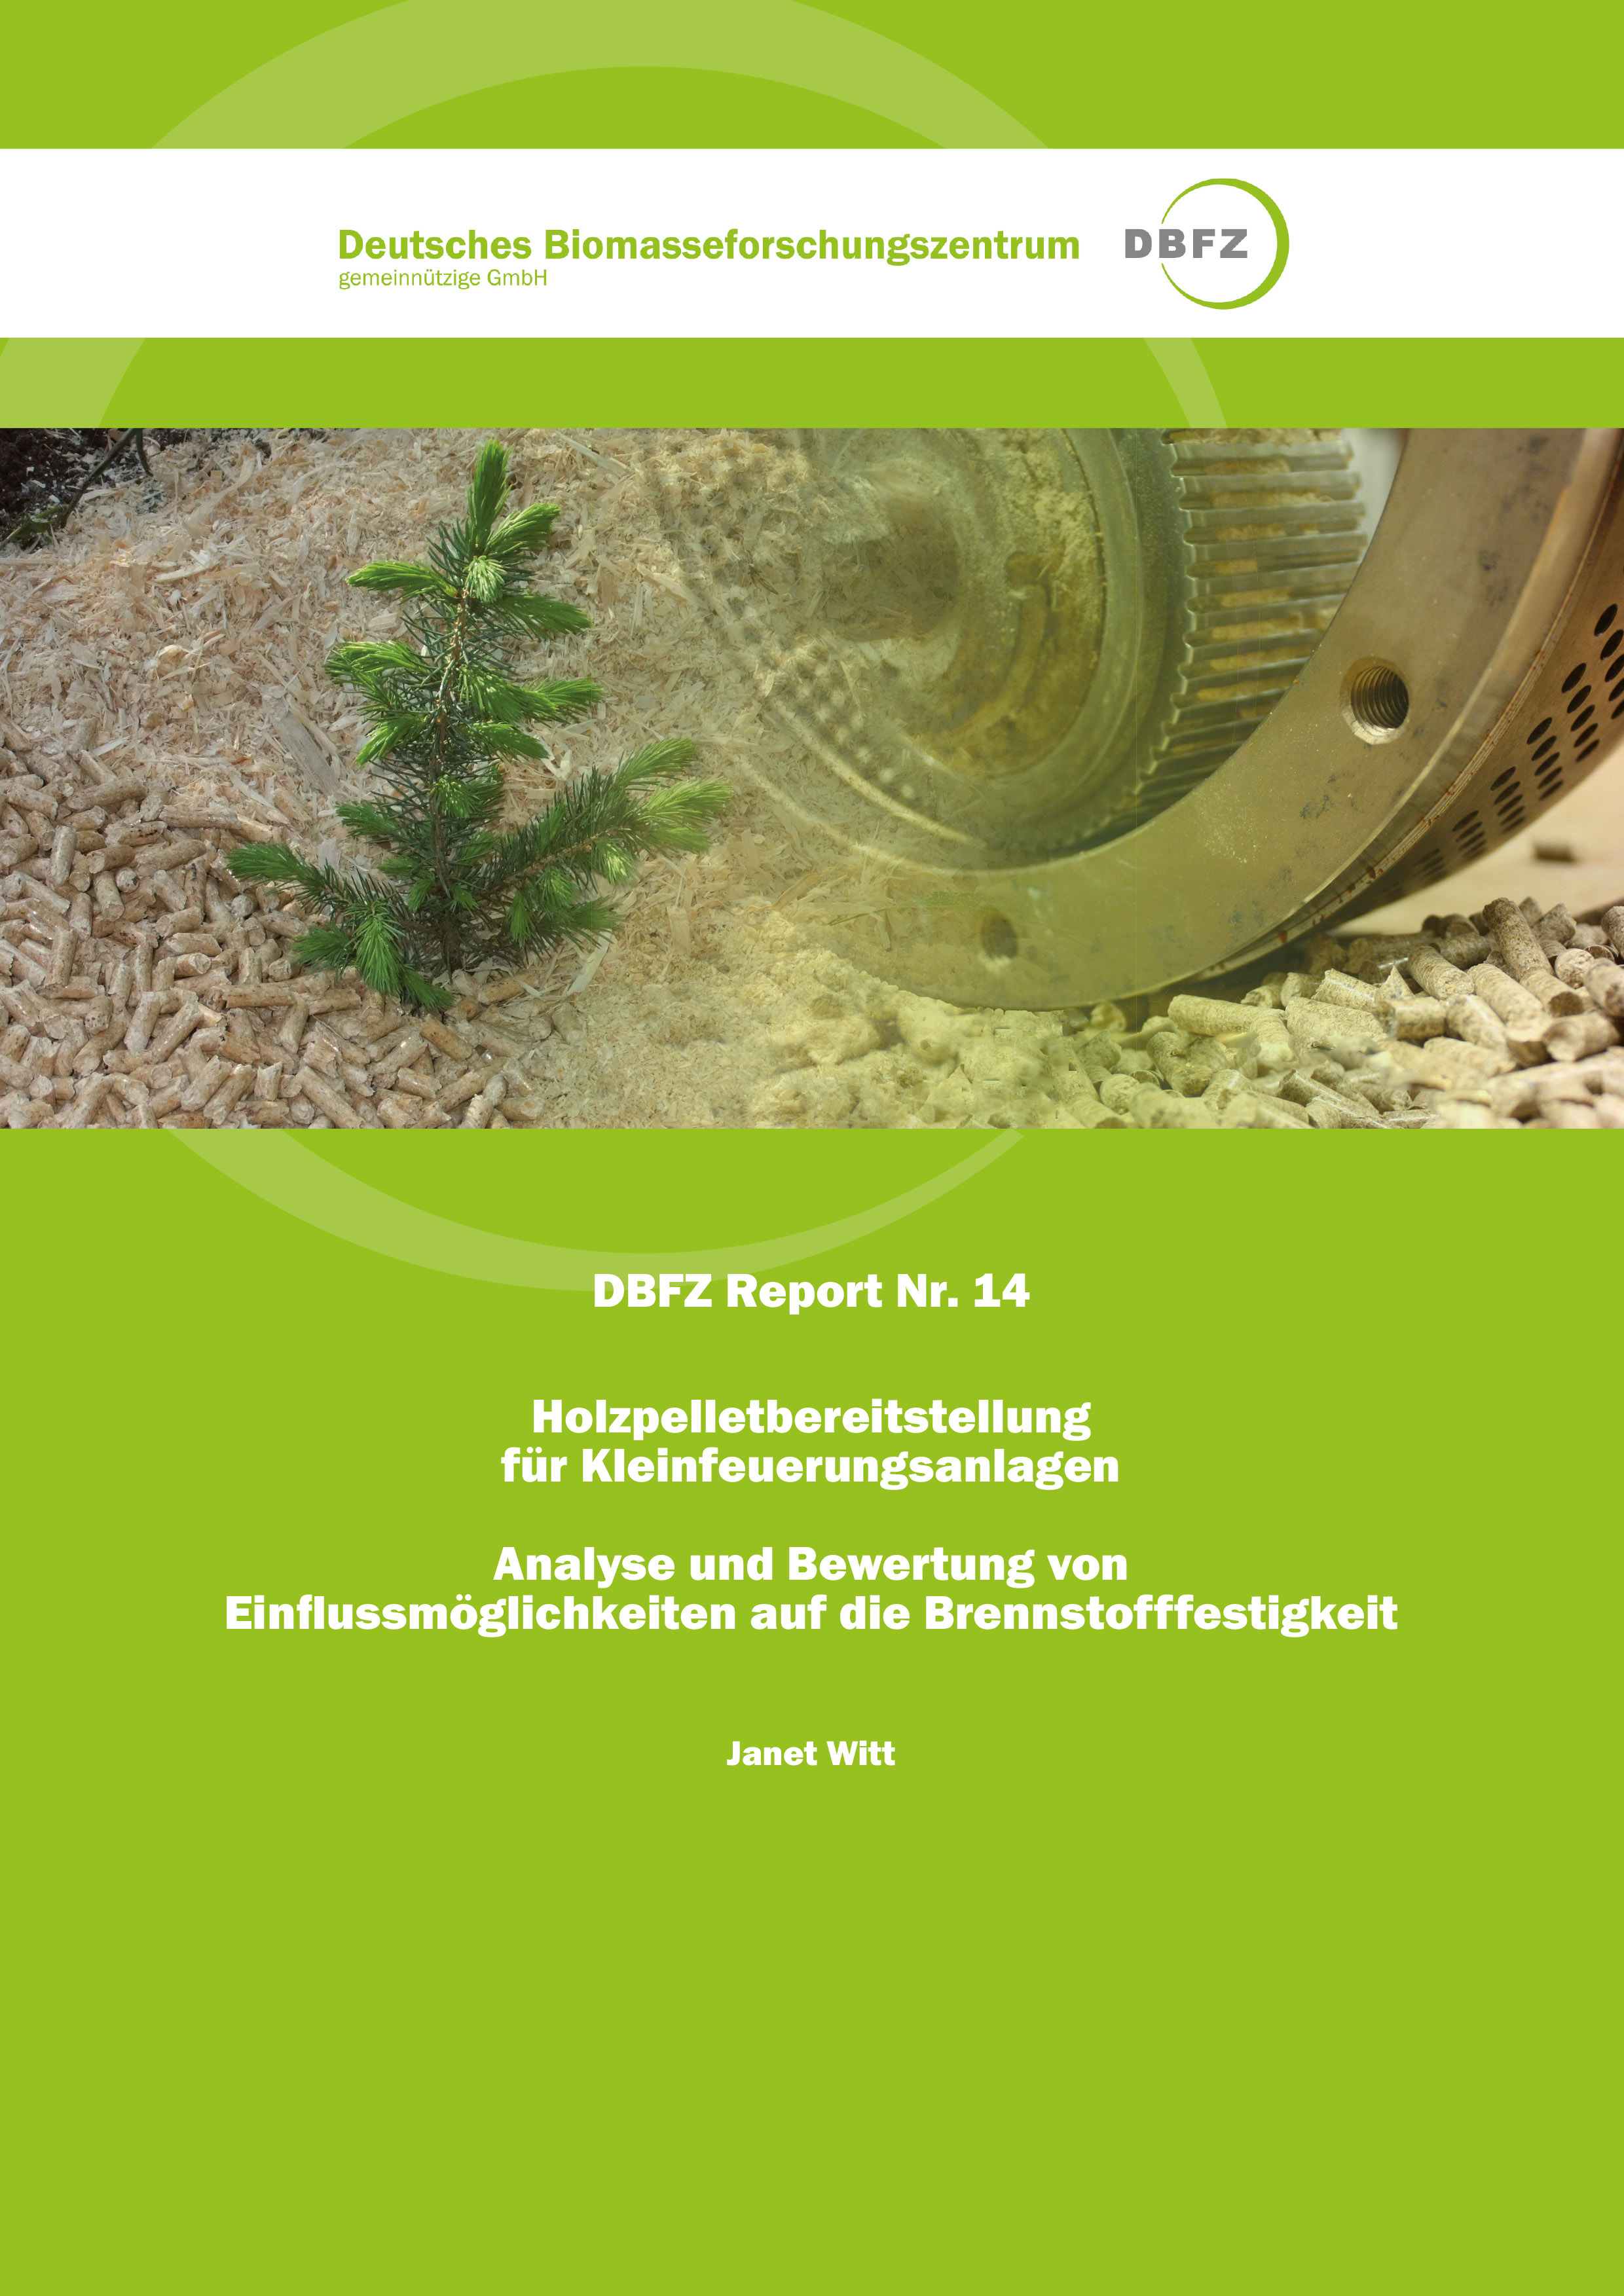 DBFZ Report Nr. 14